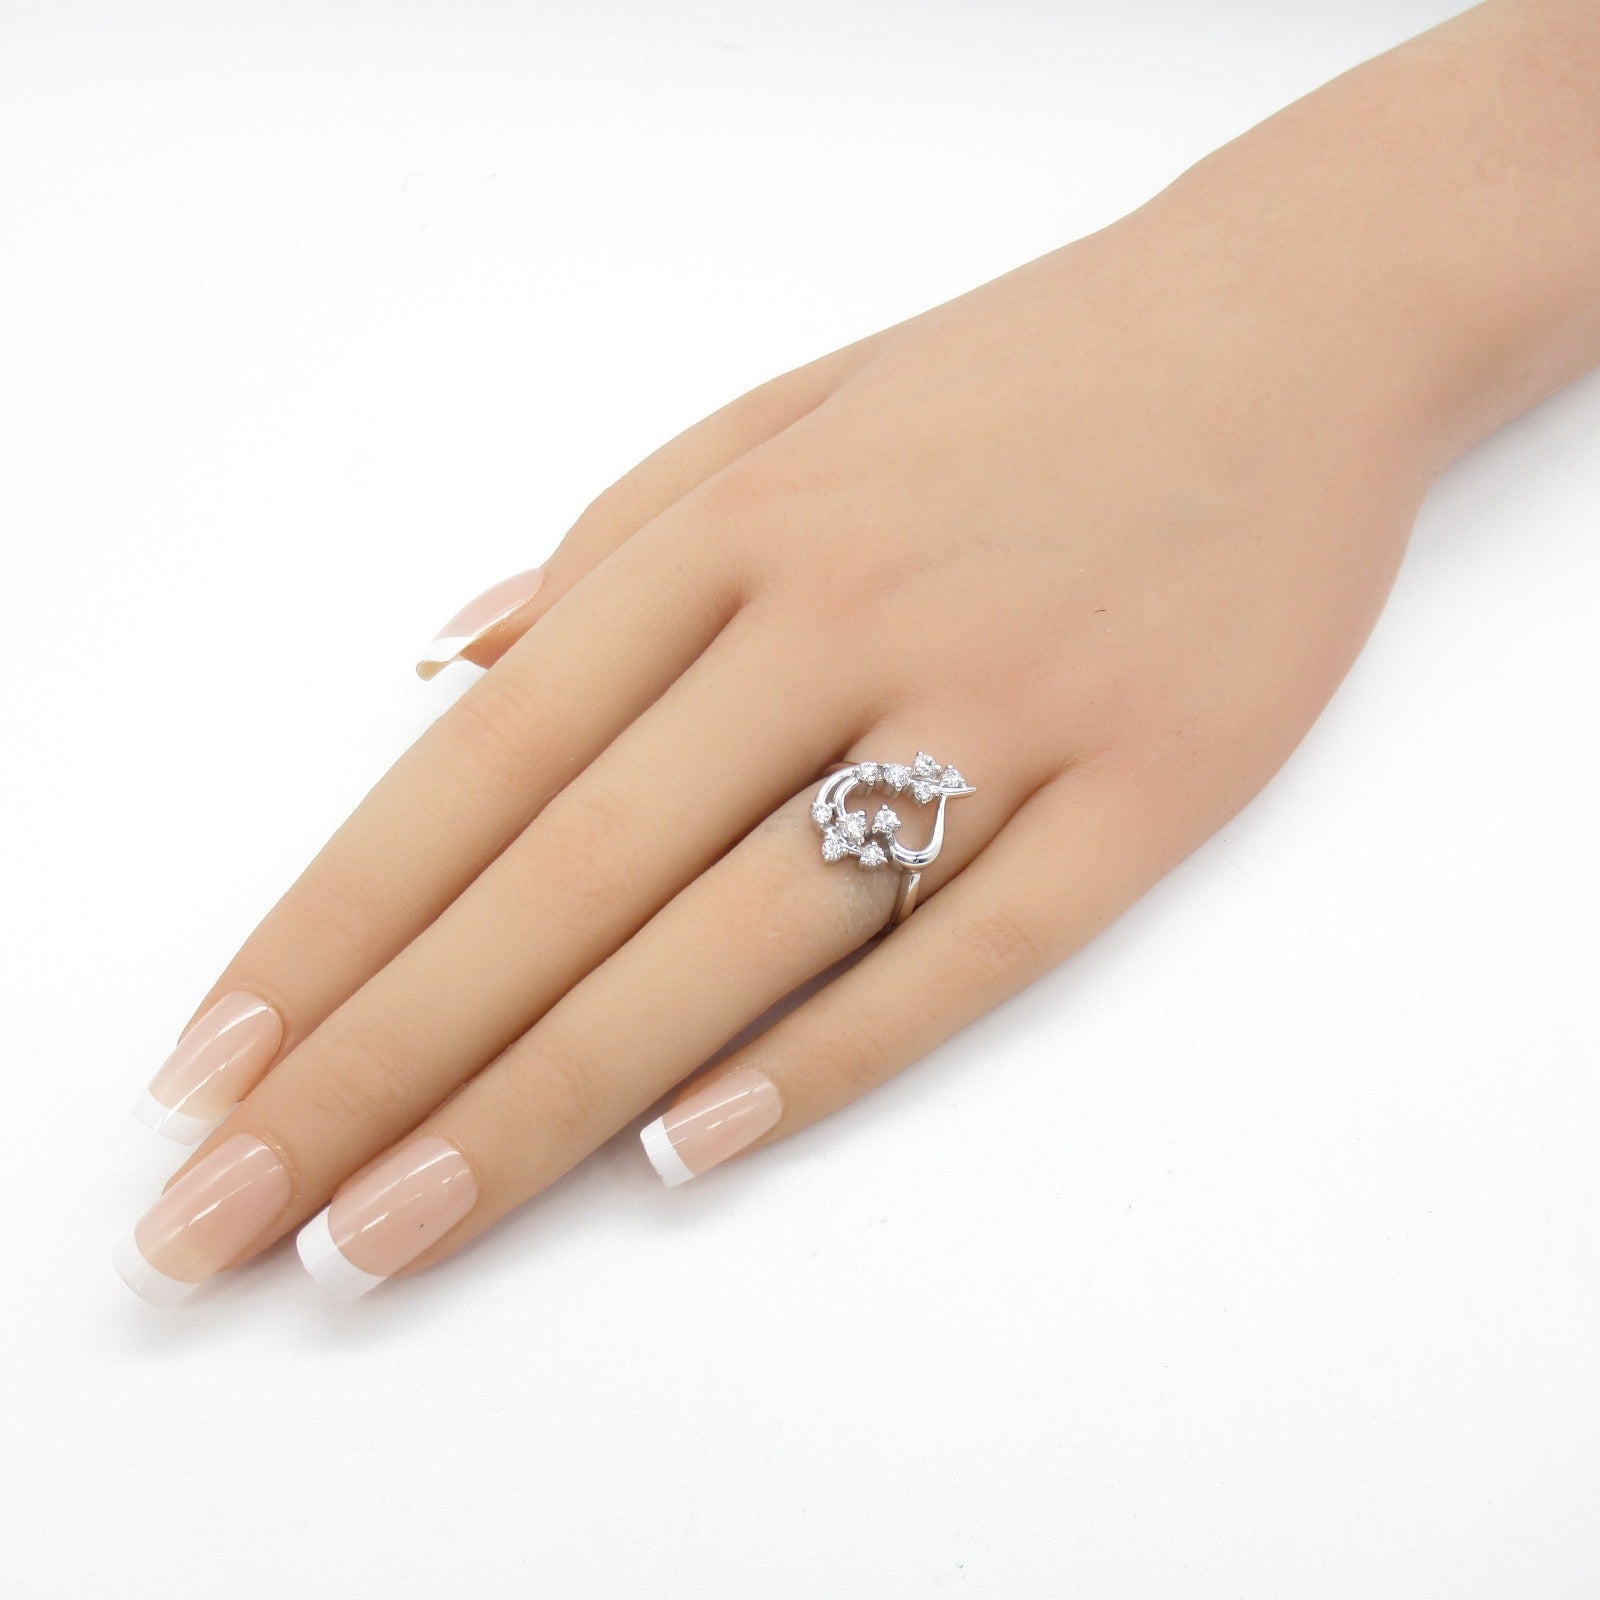 Jewelry Jewelry Diamond Ring Ring Ring Jewelry K18WG (White G) Diamond  Clear Diamond 6.1g